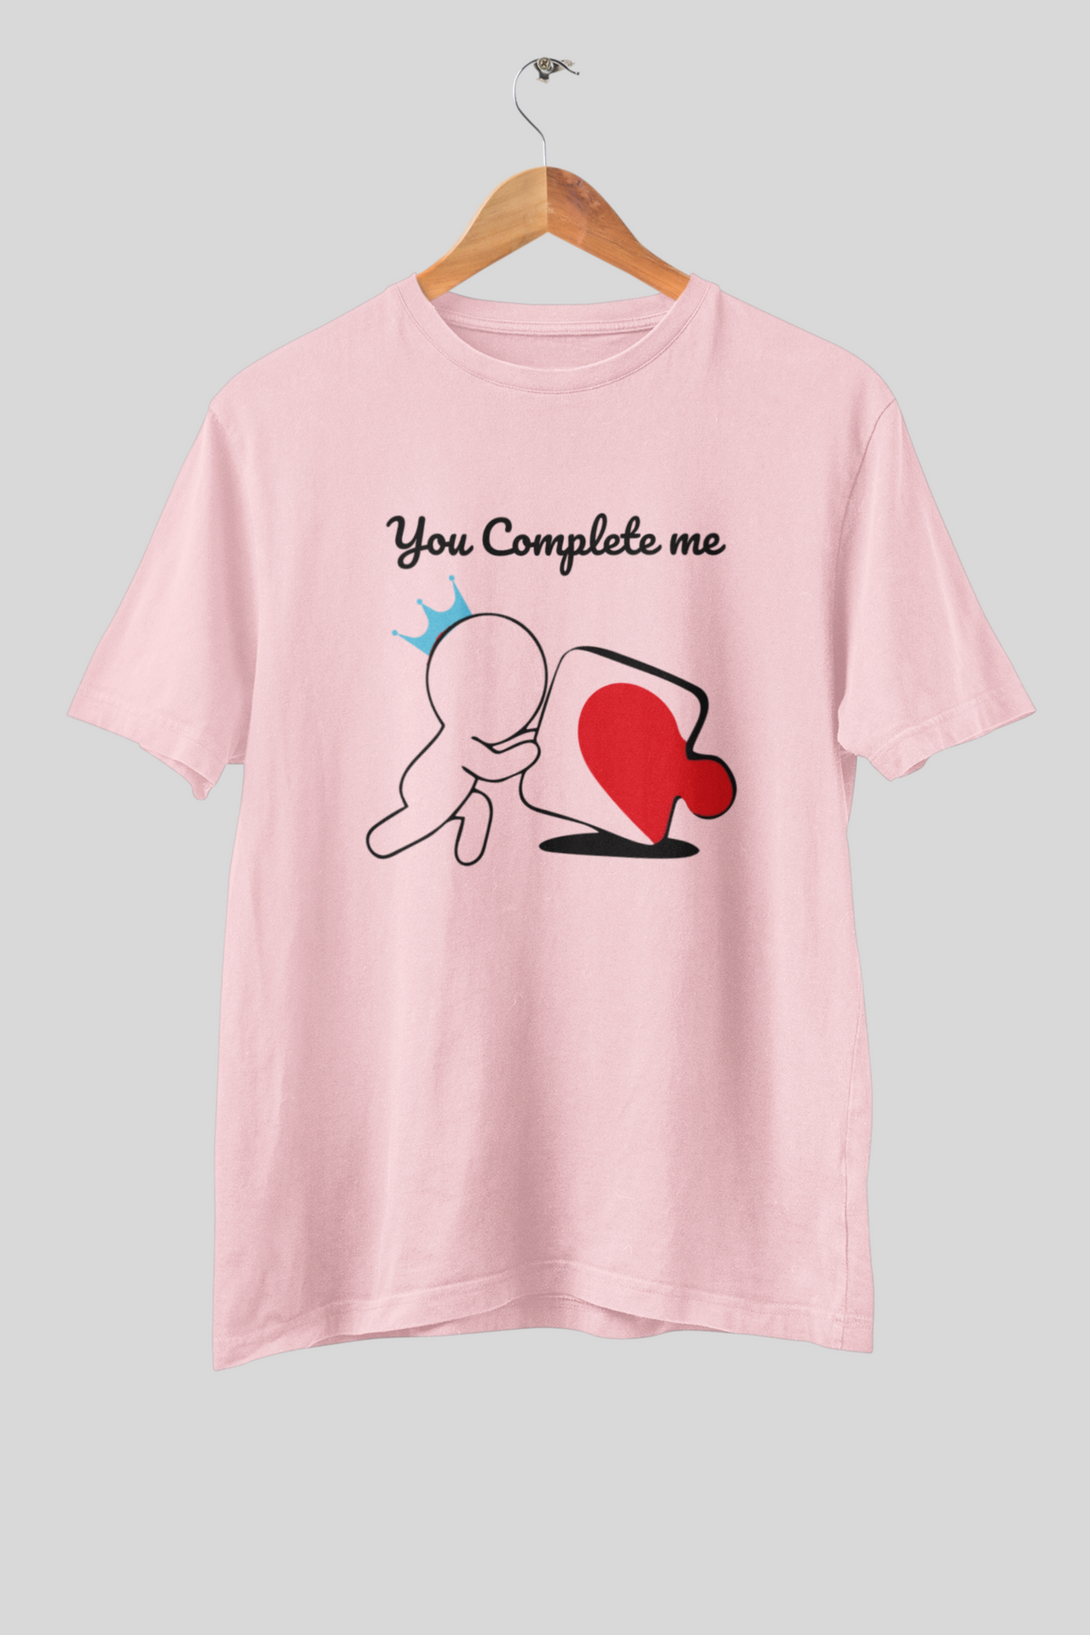 You Complete Me Couple T Shirt - WowWaves - 4